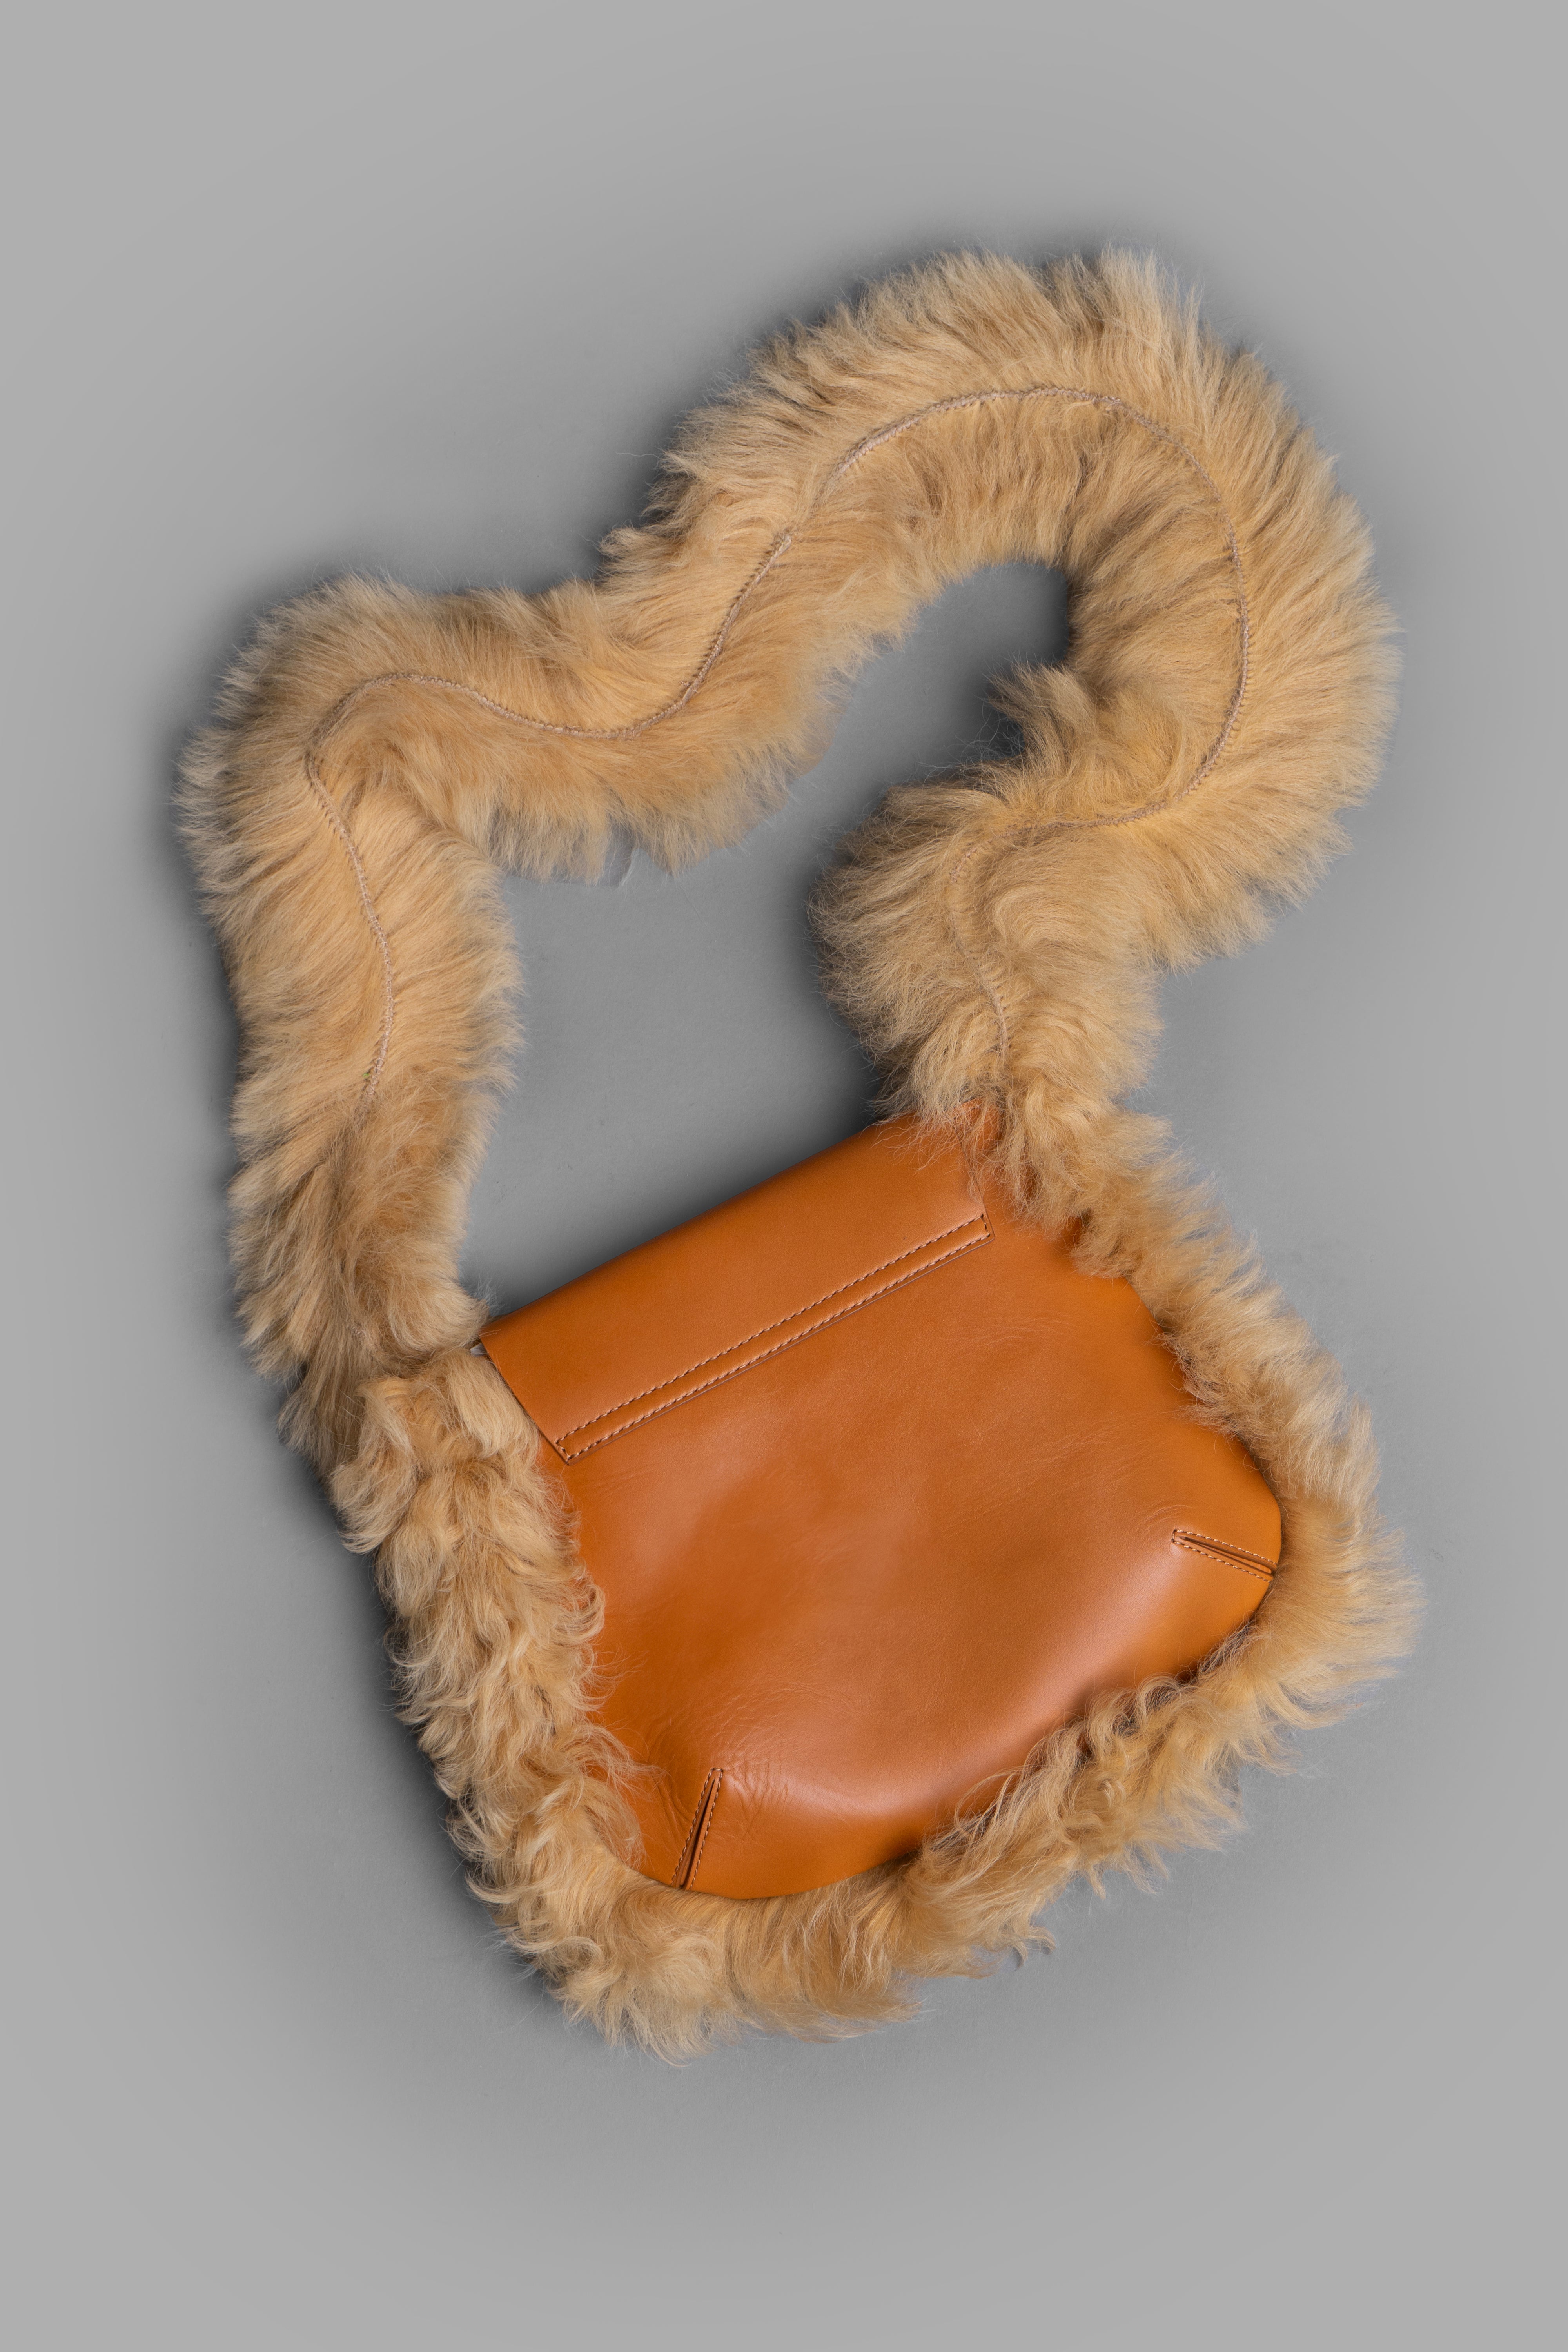 Etlon Leather Bag